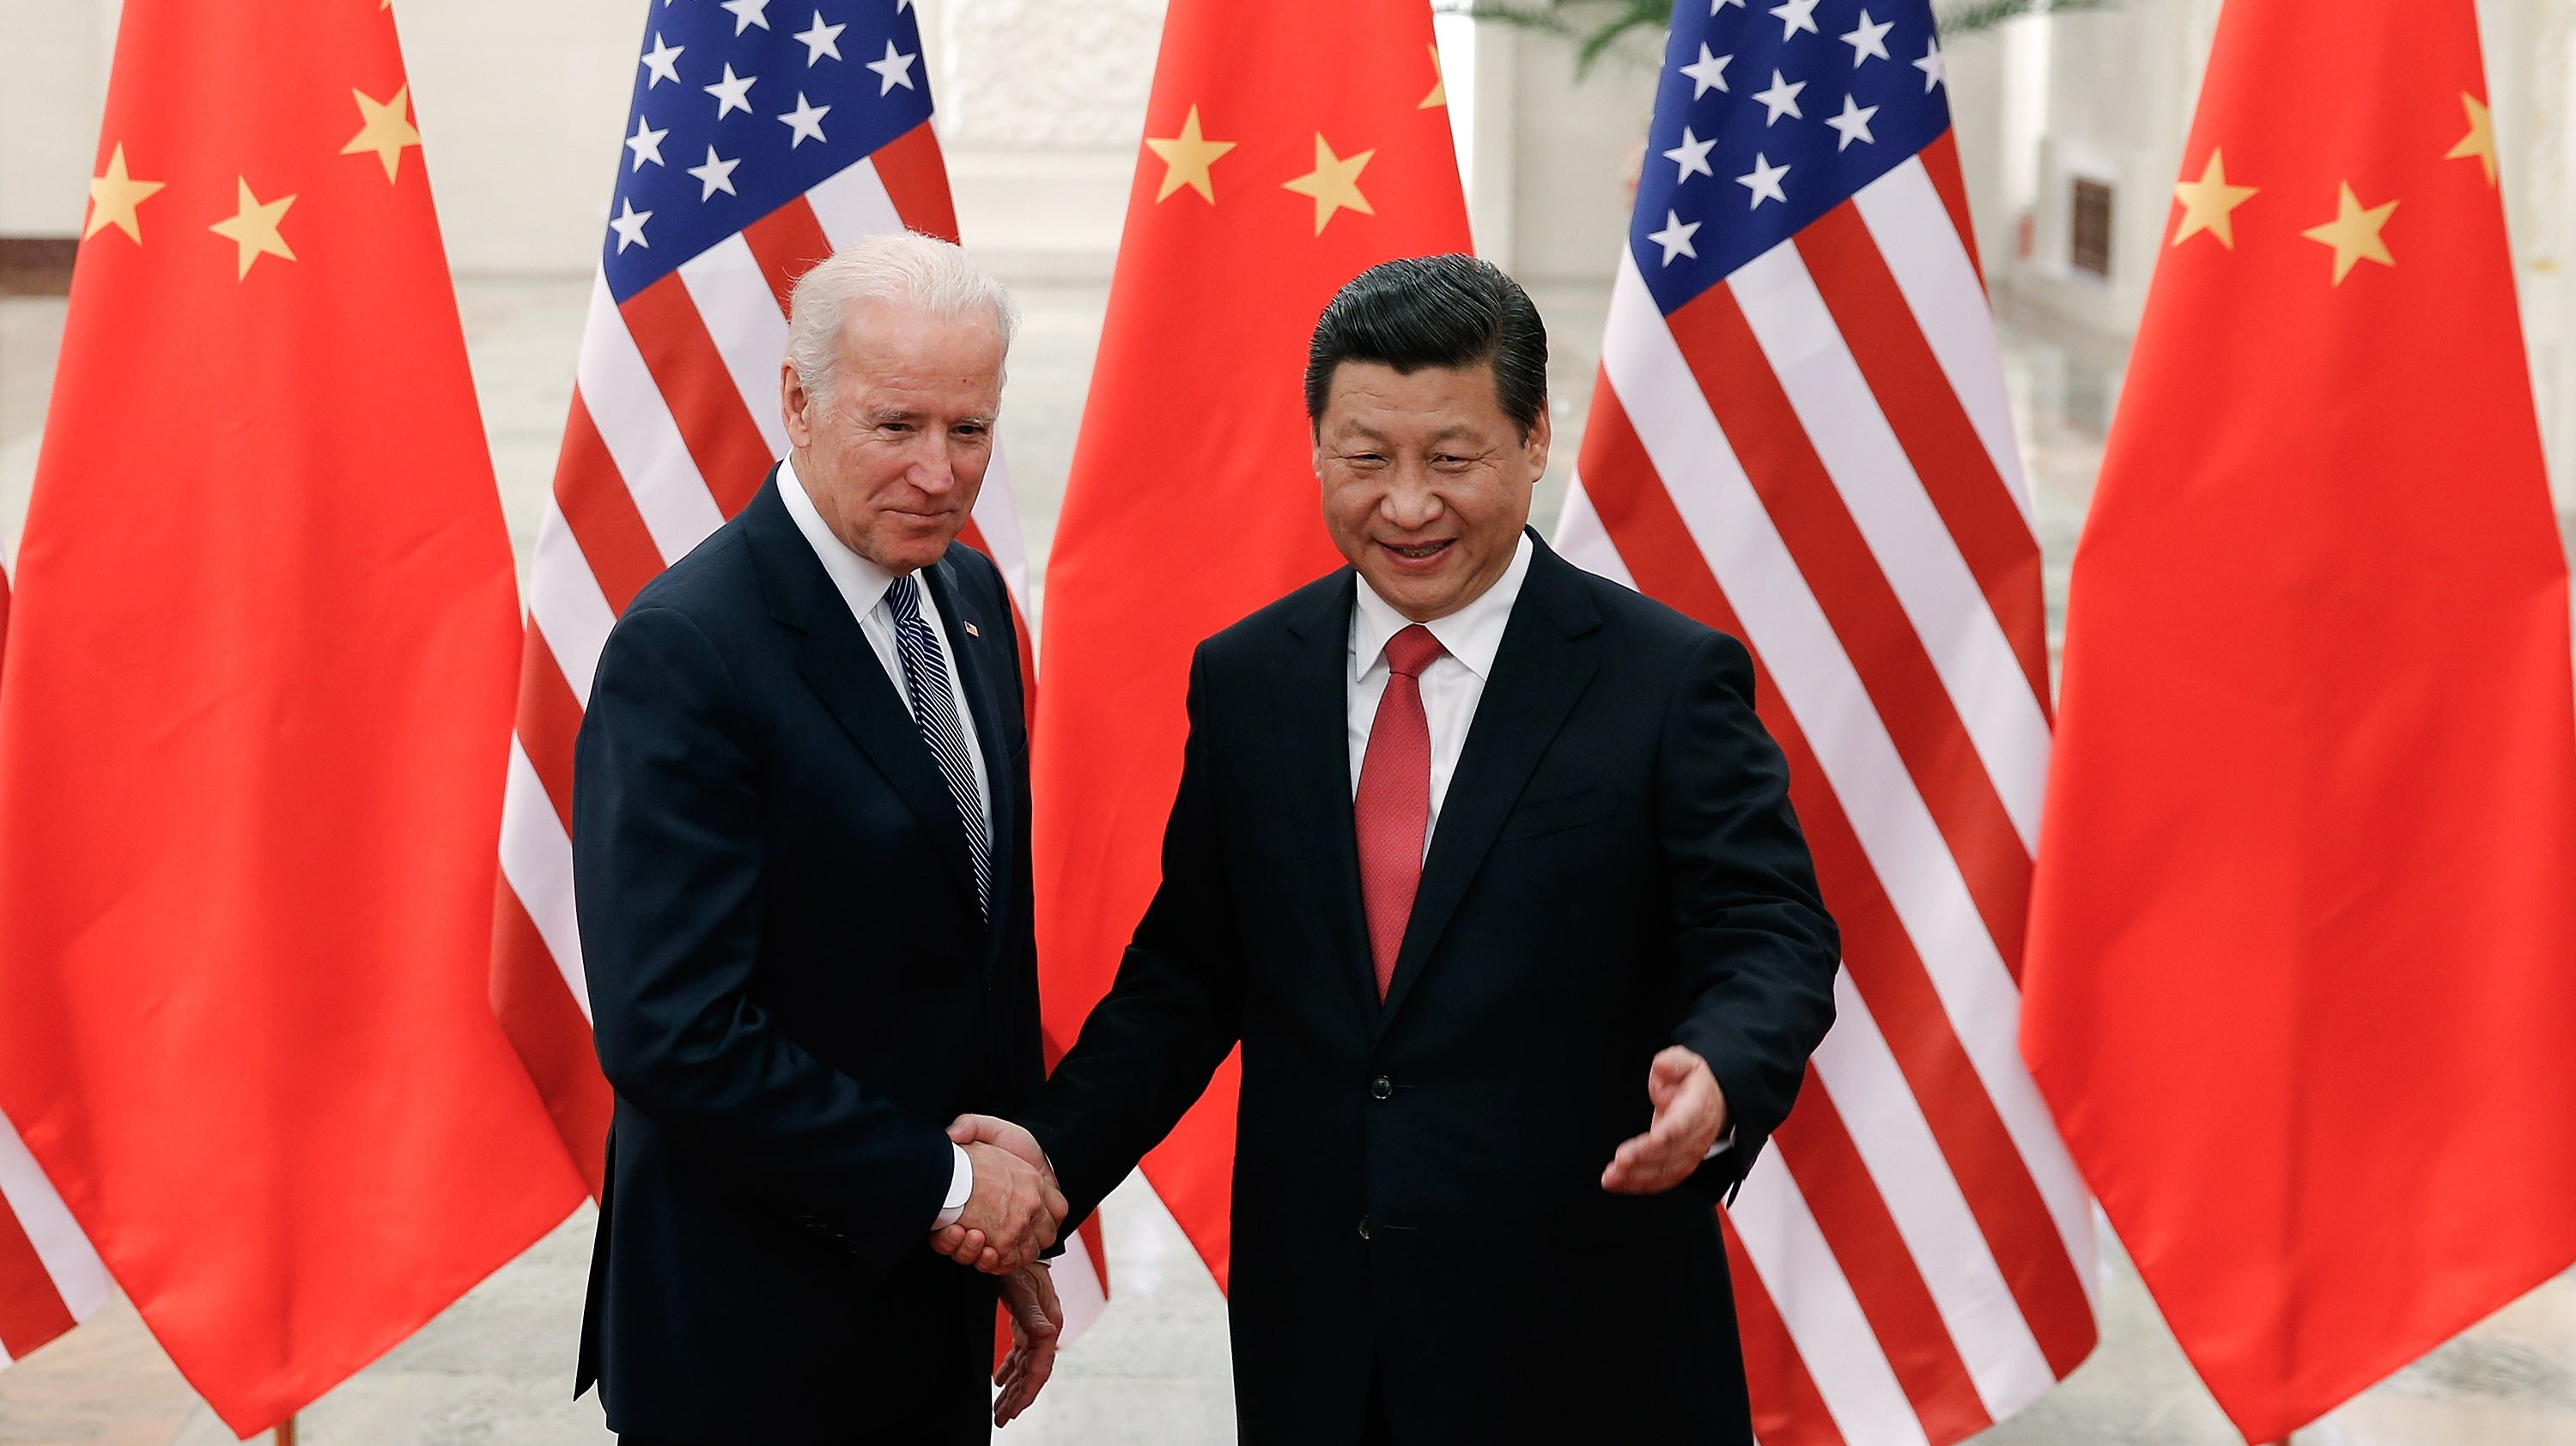 U.S Vice President Joe Biden Visits China